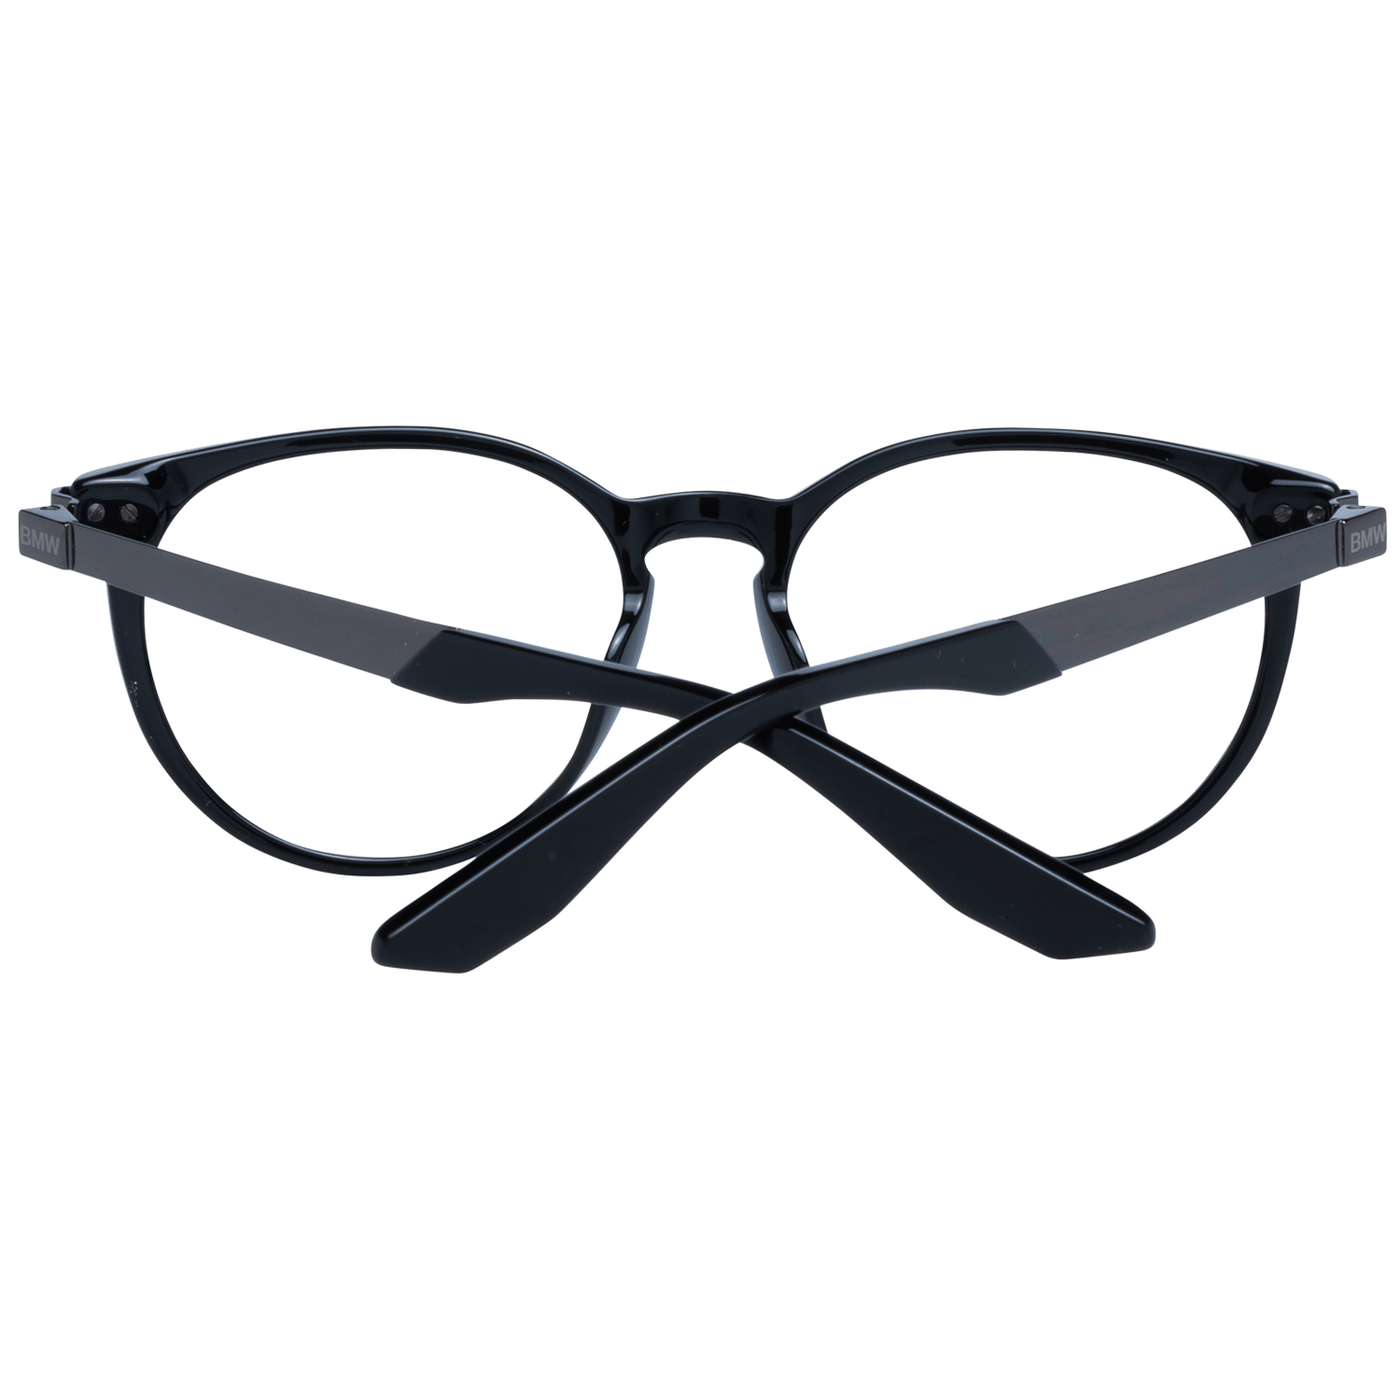 BMW Black Unisex Optical Frames